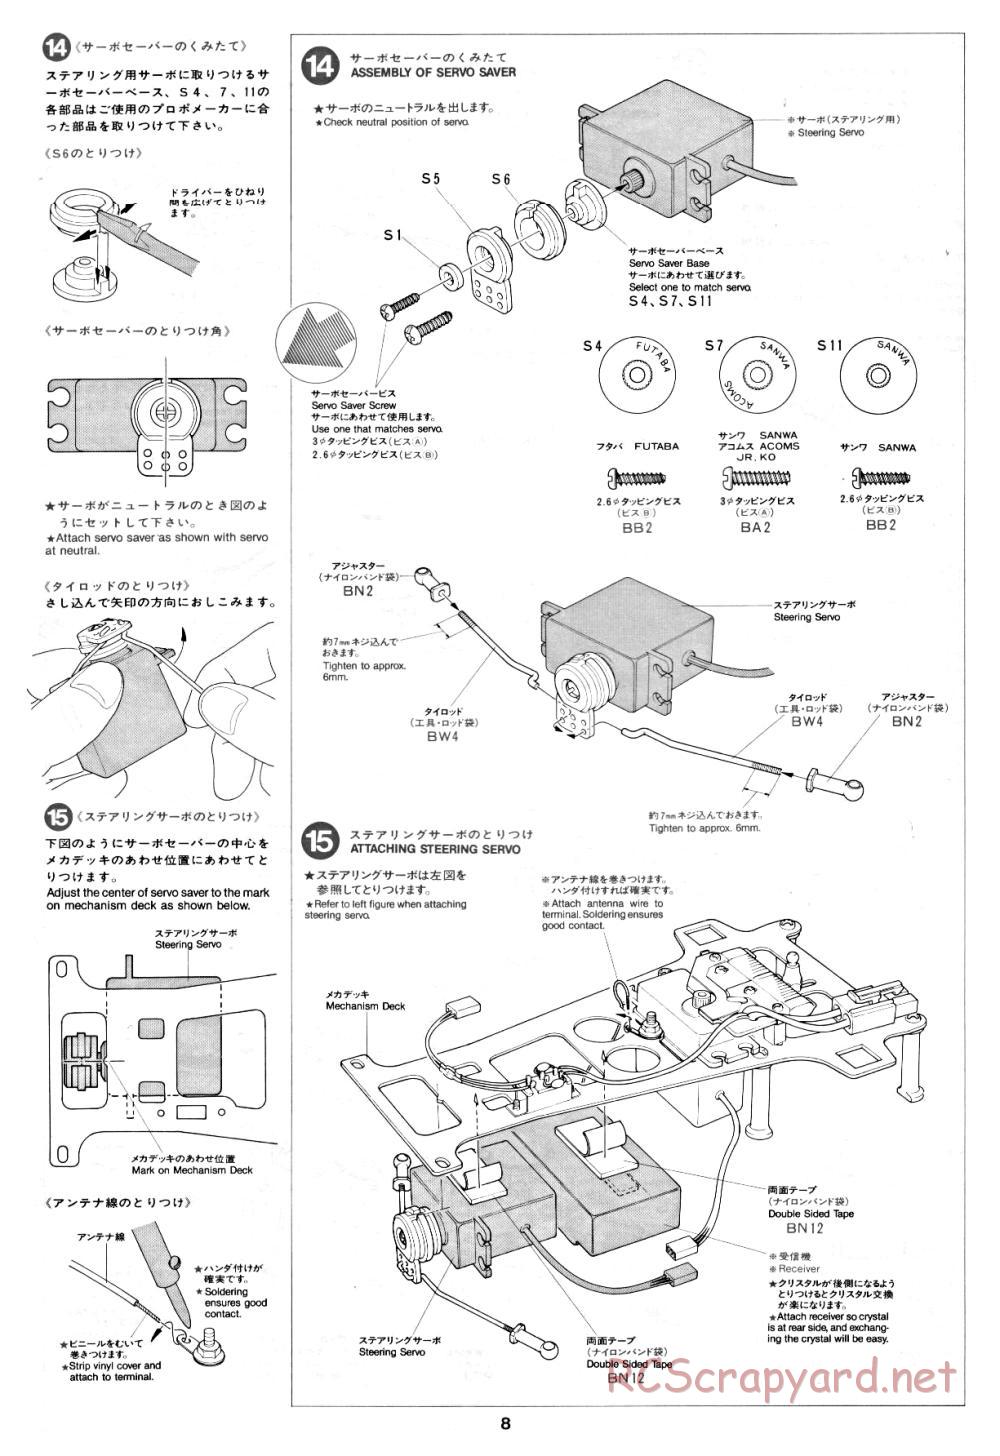 Tamiya - Toyota Tom's 84C - RM MK.6 - 58049 - Manual - Page 8